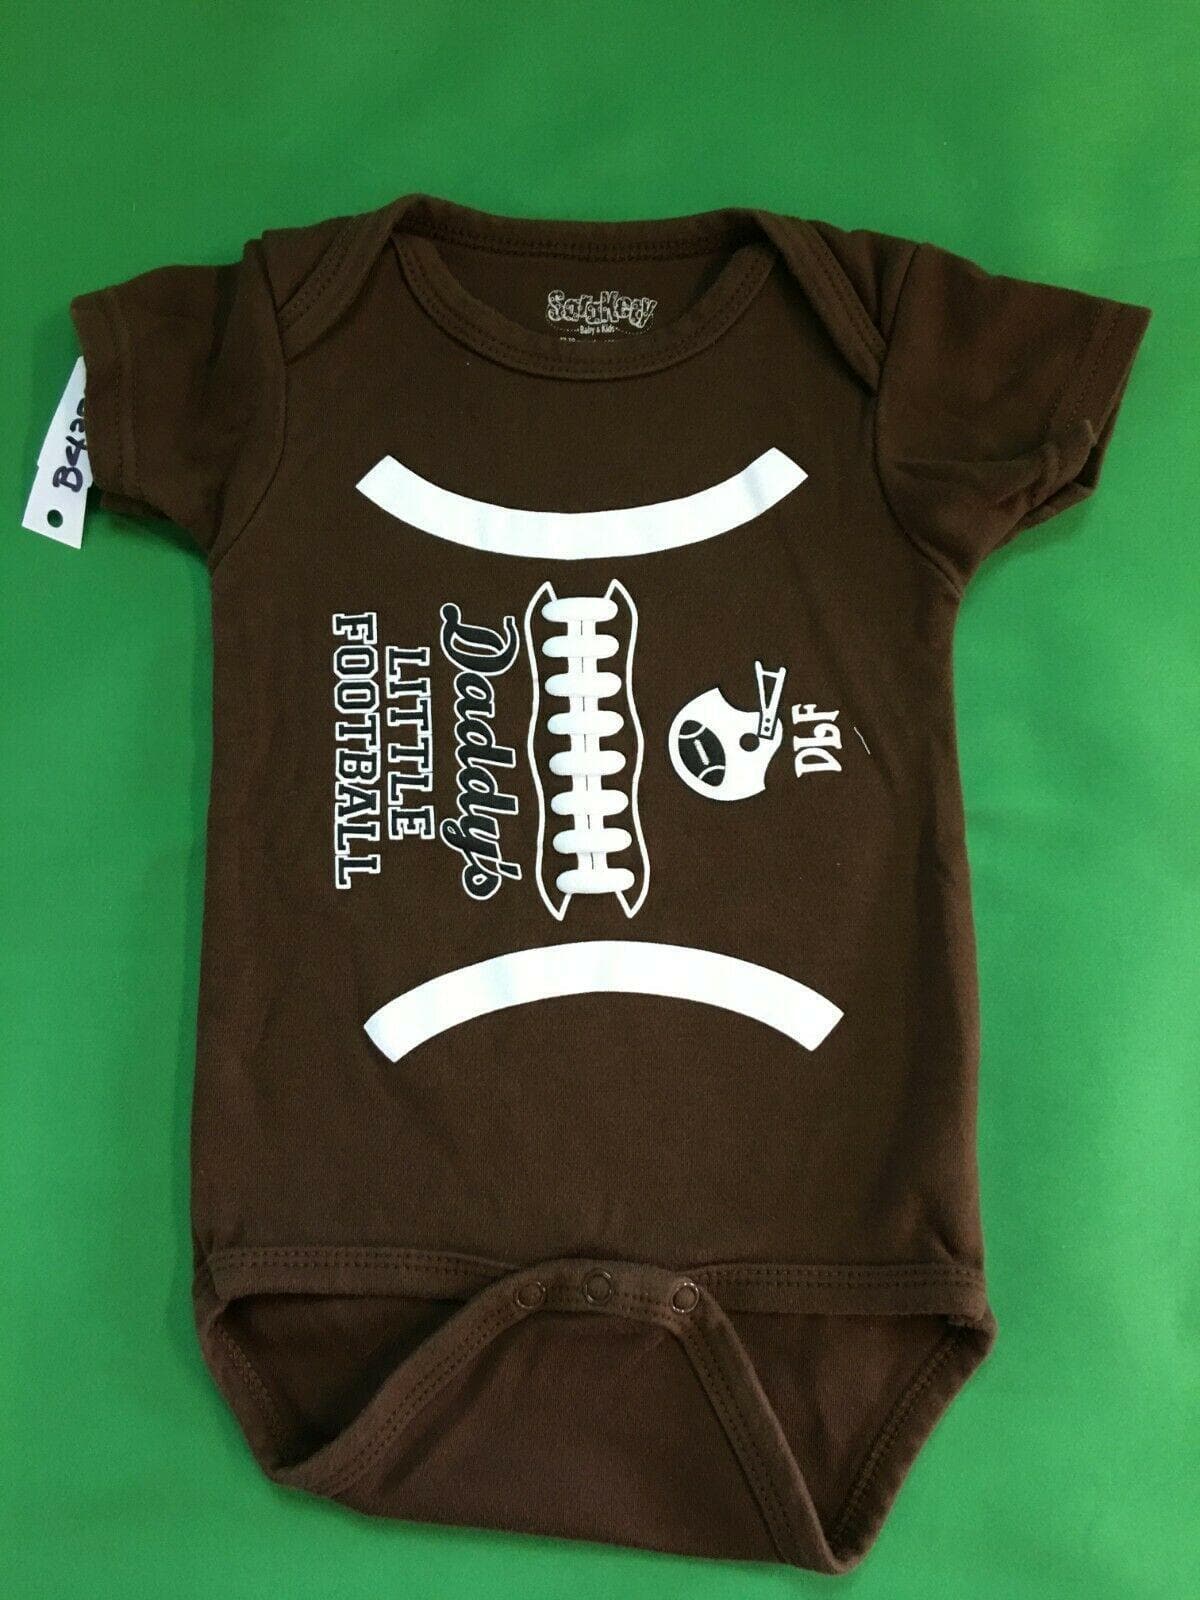 American Football "Daddy's Little Football" Bodysuit/Vest Infant 12-18 Months